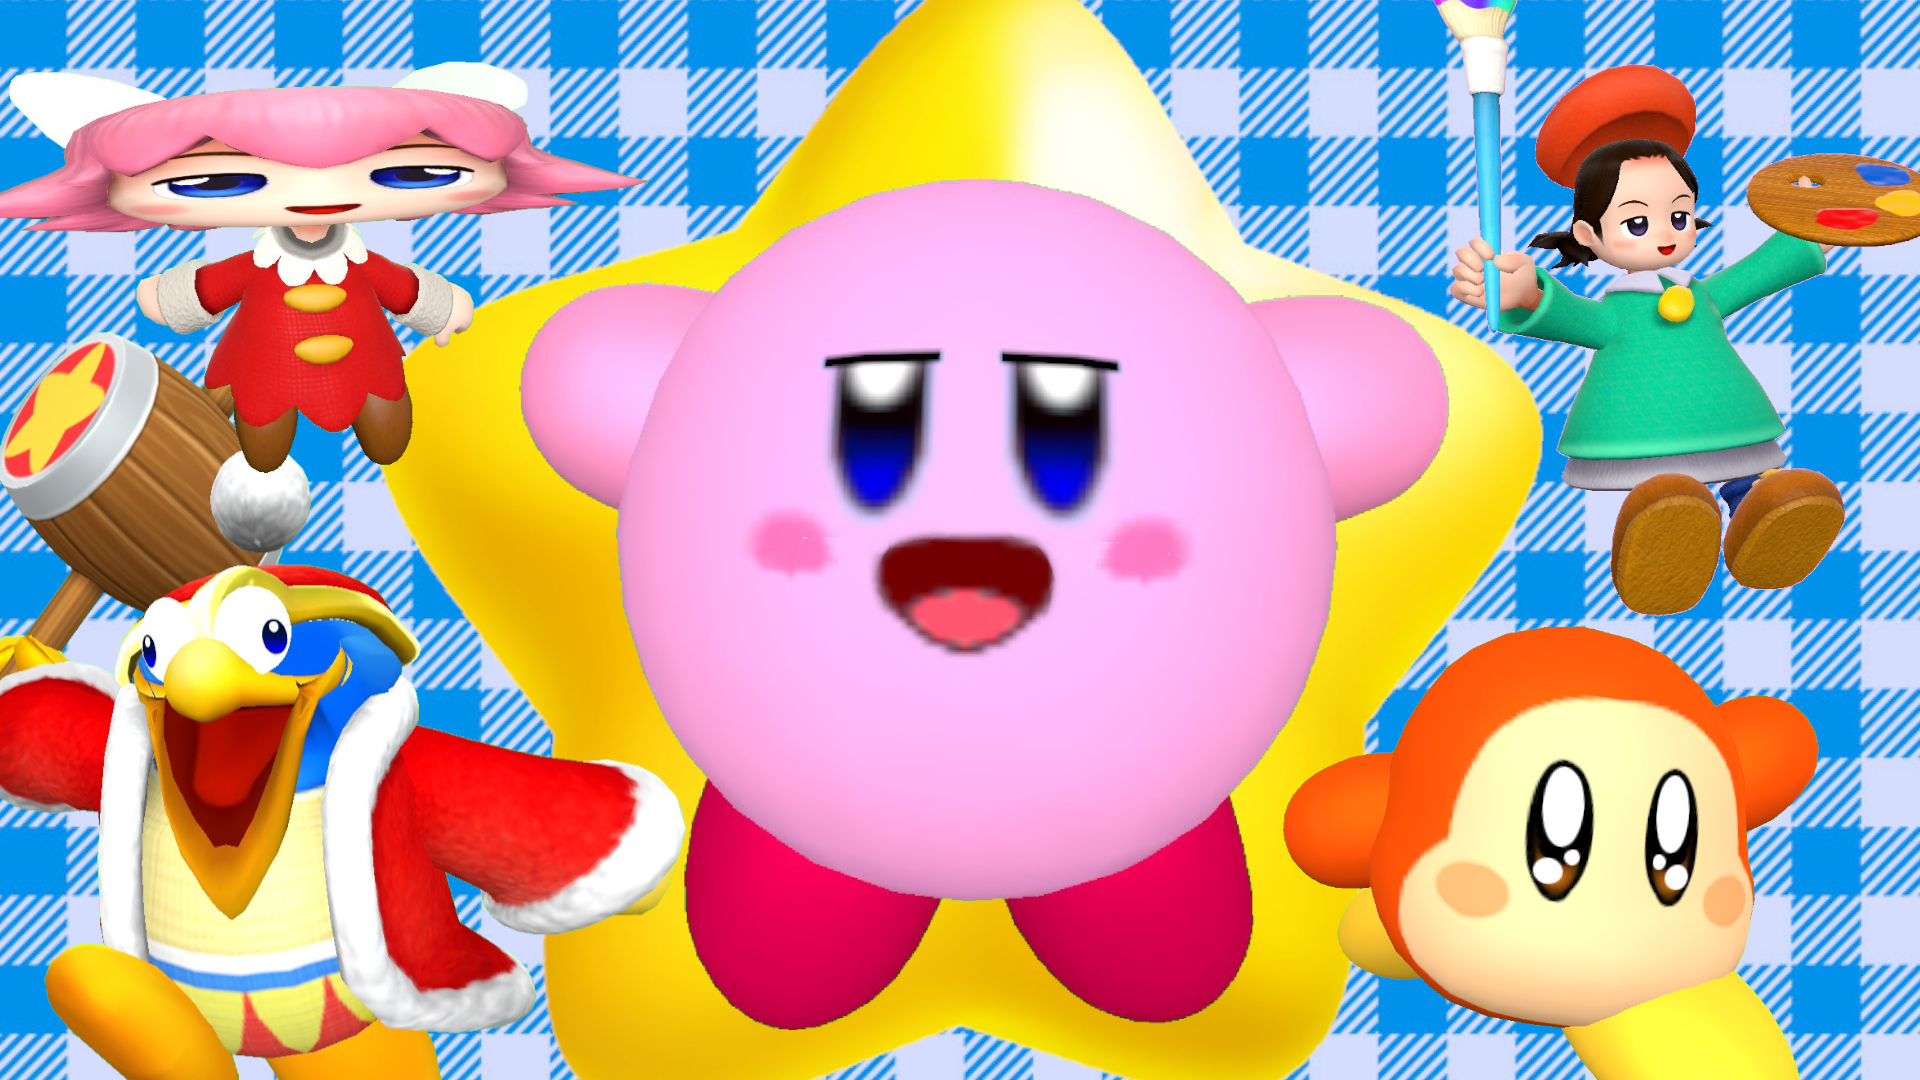 SSGV5: Kirby's Stupid Return to Dream Land, SSGV5 Wiki